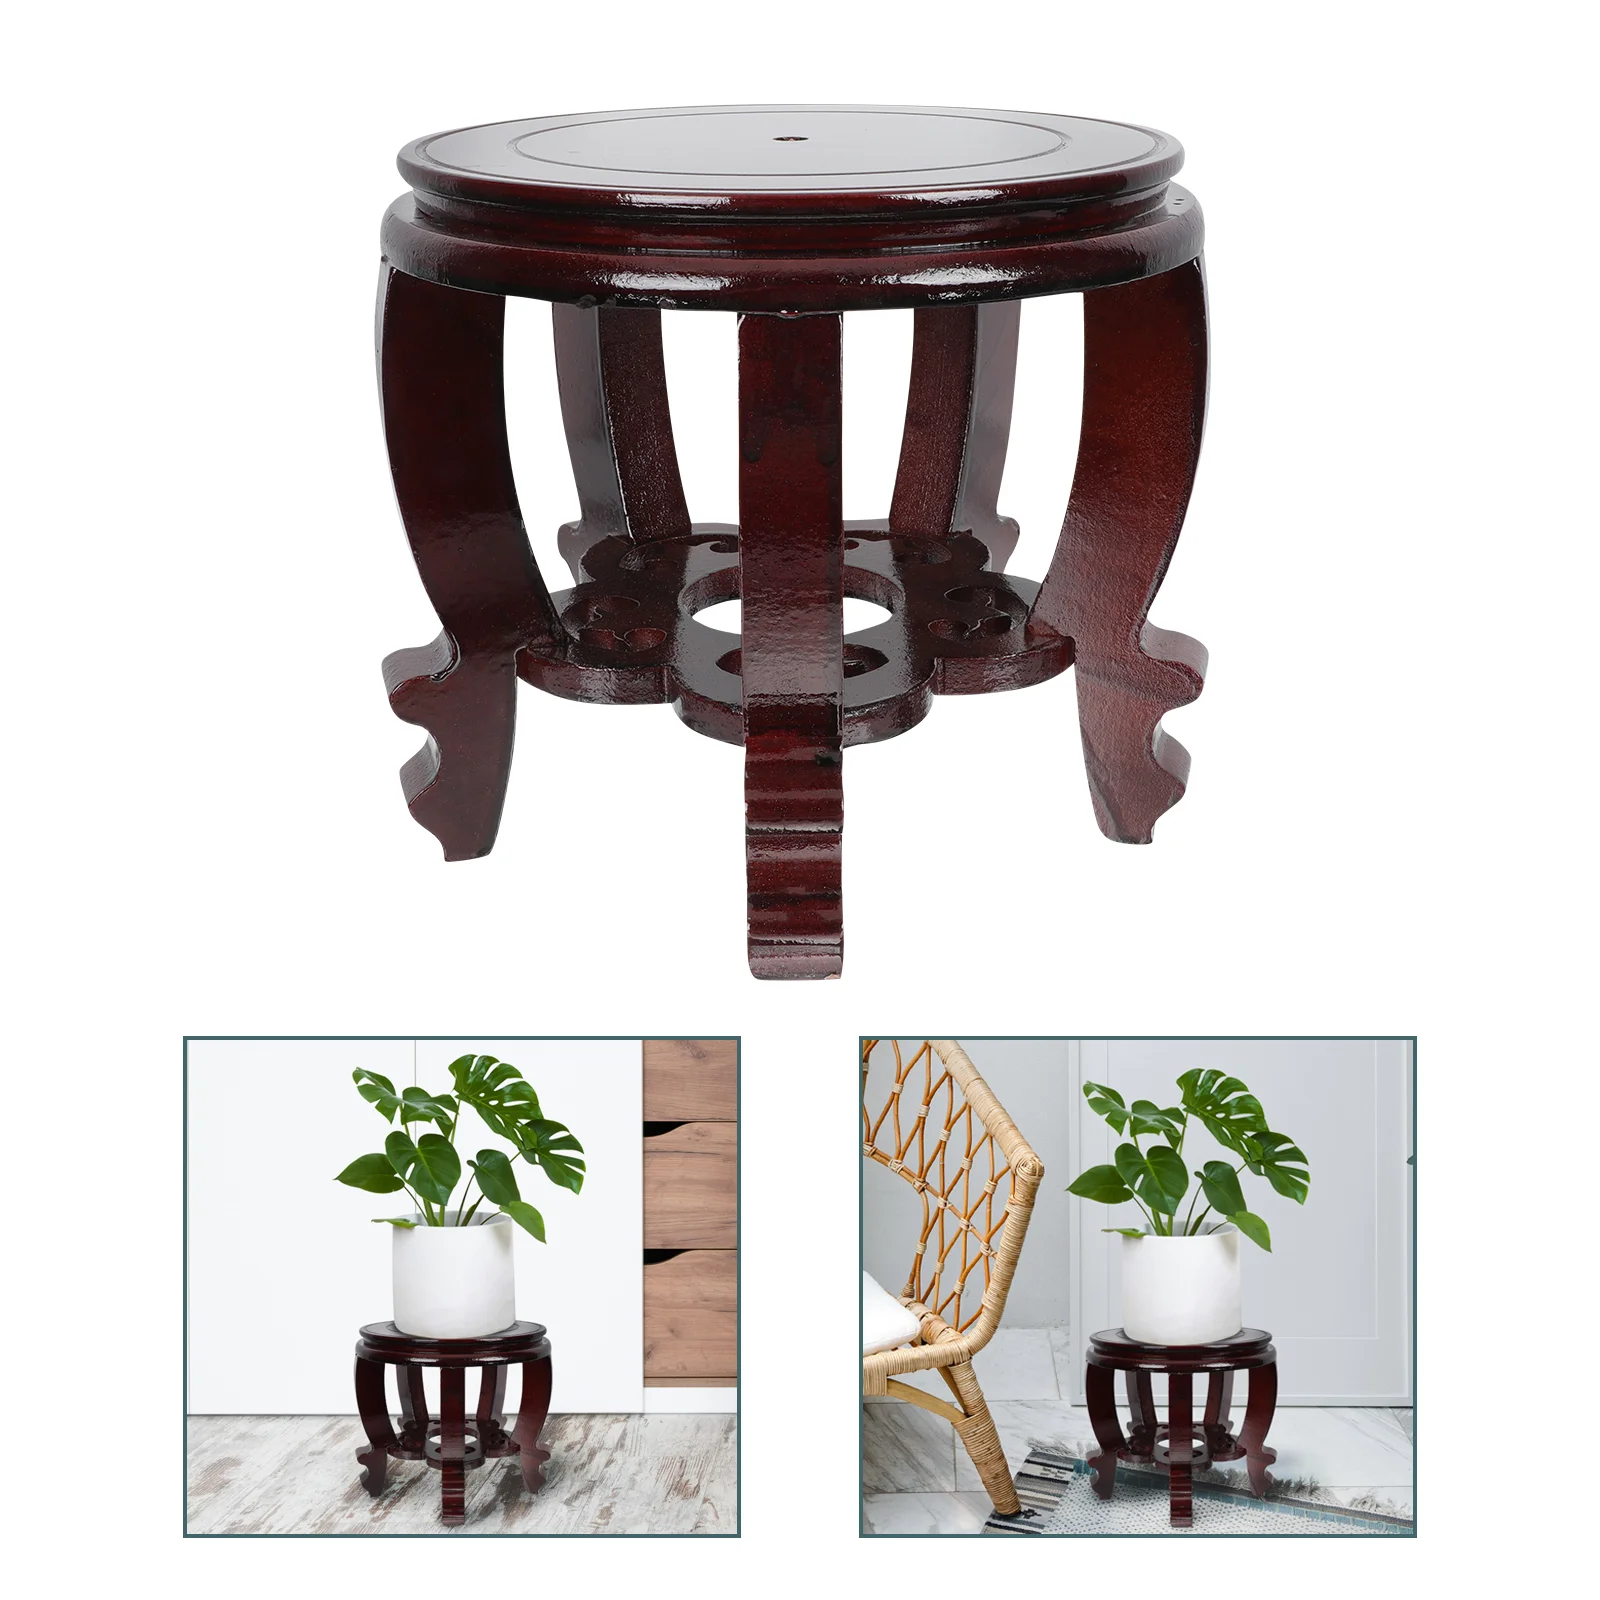 

Tall Wooden Seat Decorative Base Display Pedestal Rack Craft Adornment Serving Tray Flower Bonsai Bases